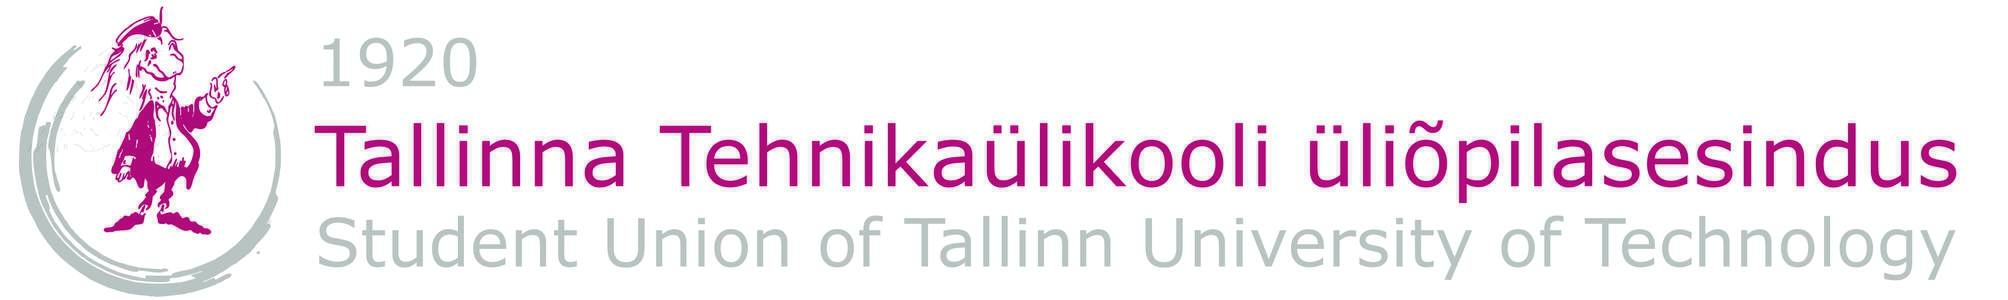 1920  Tallinna Tehnikaülikooli üliõpilasesindus Student Union of Tallinn University of Technology  